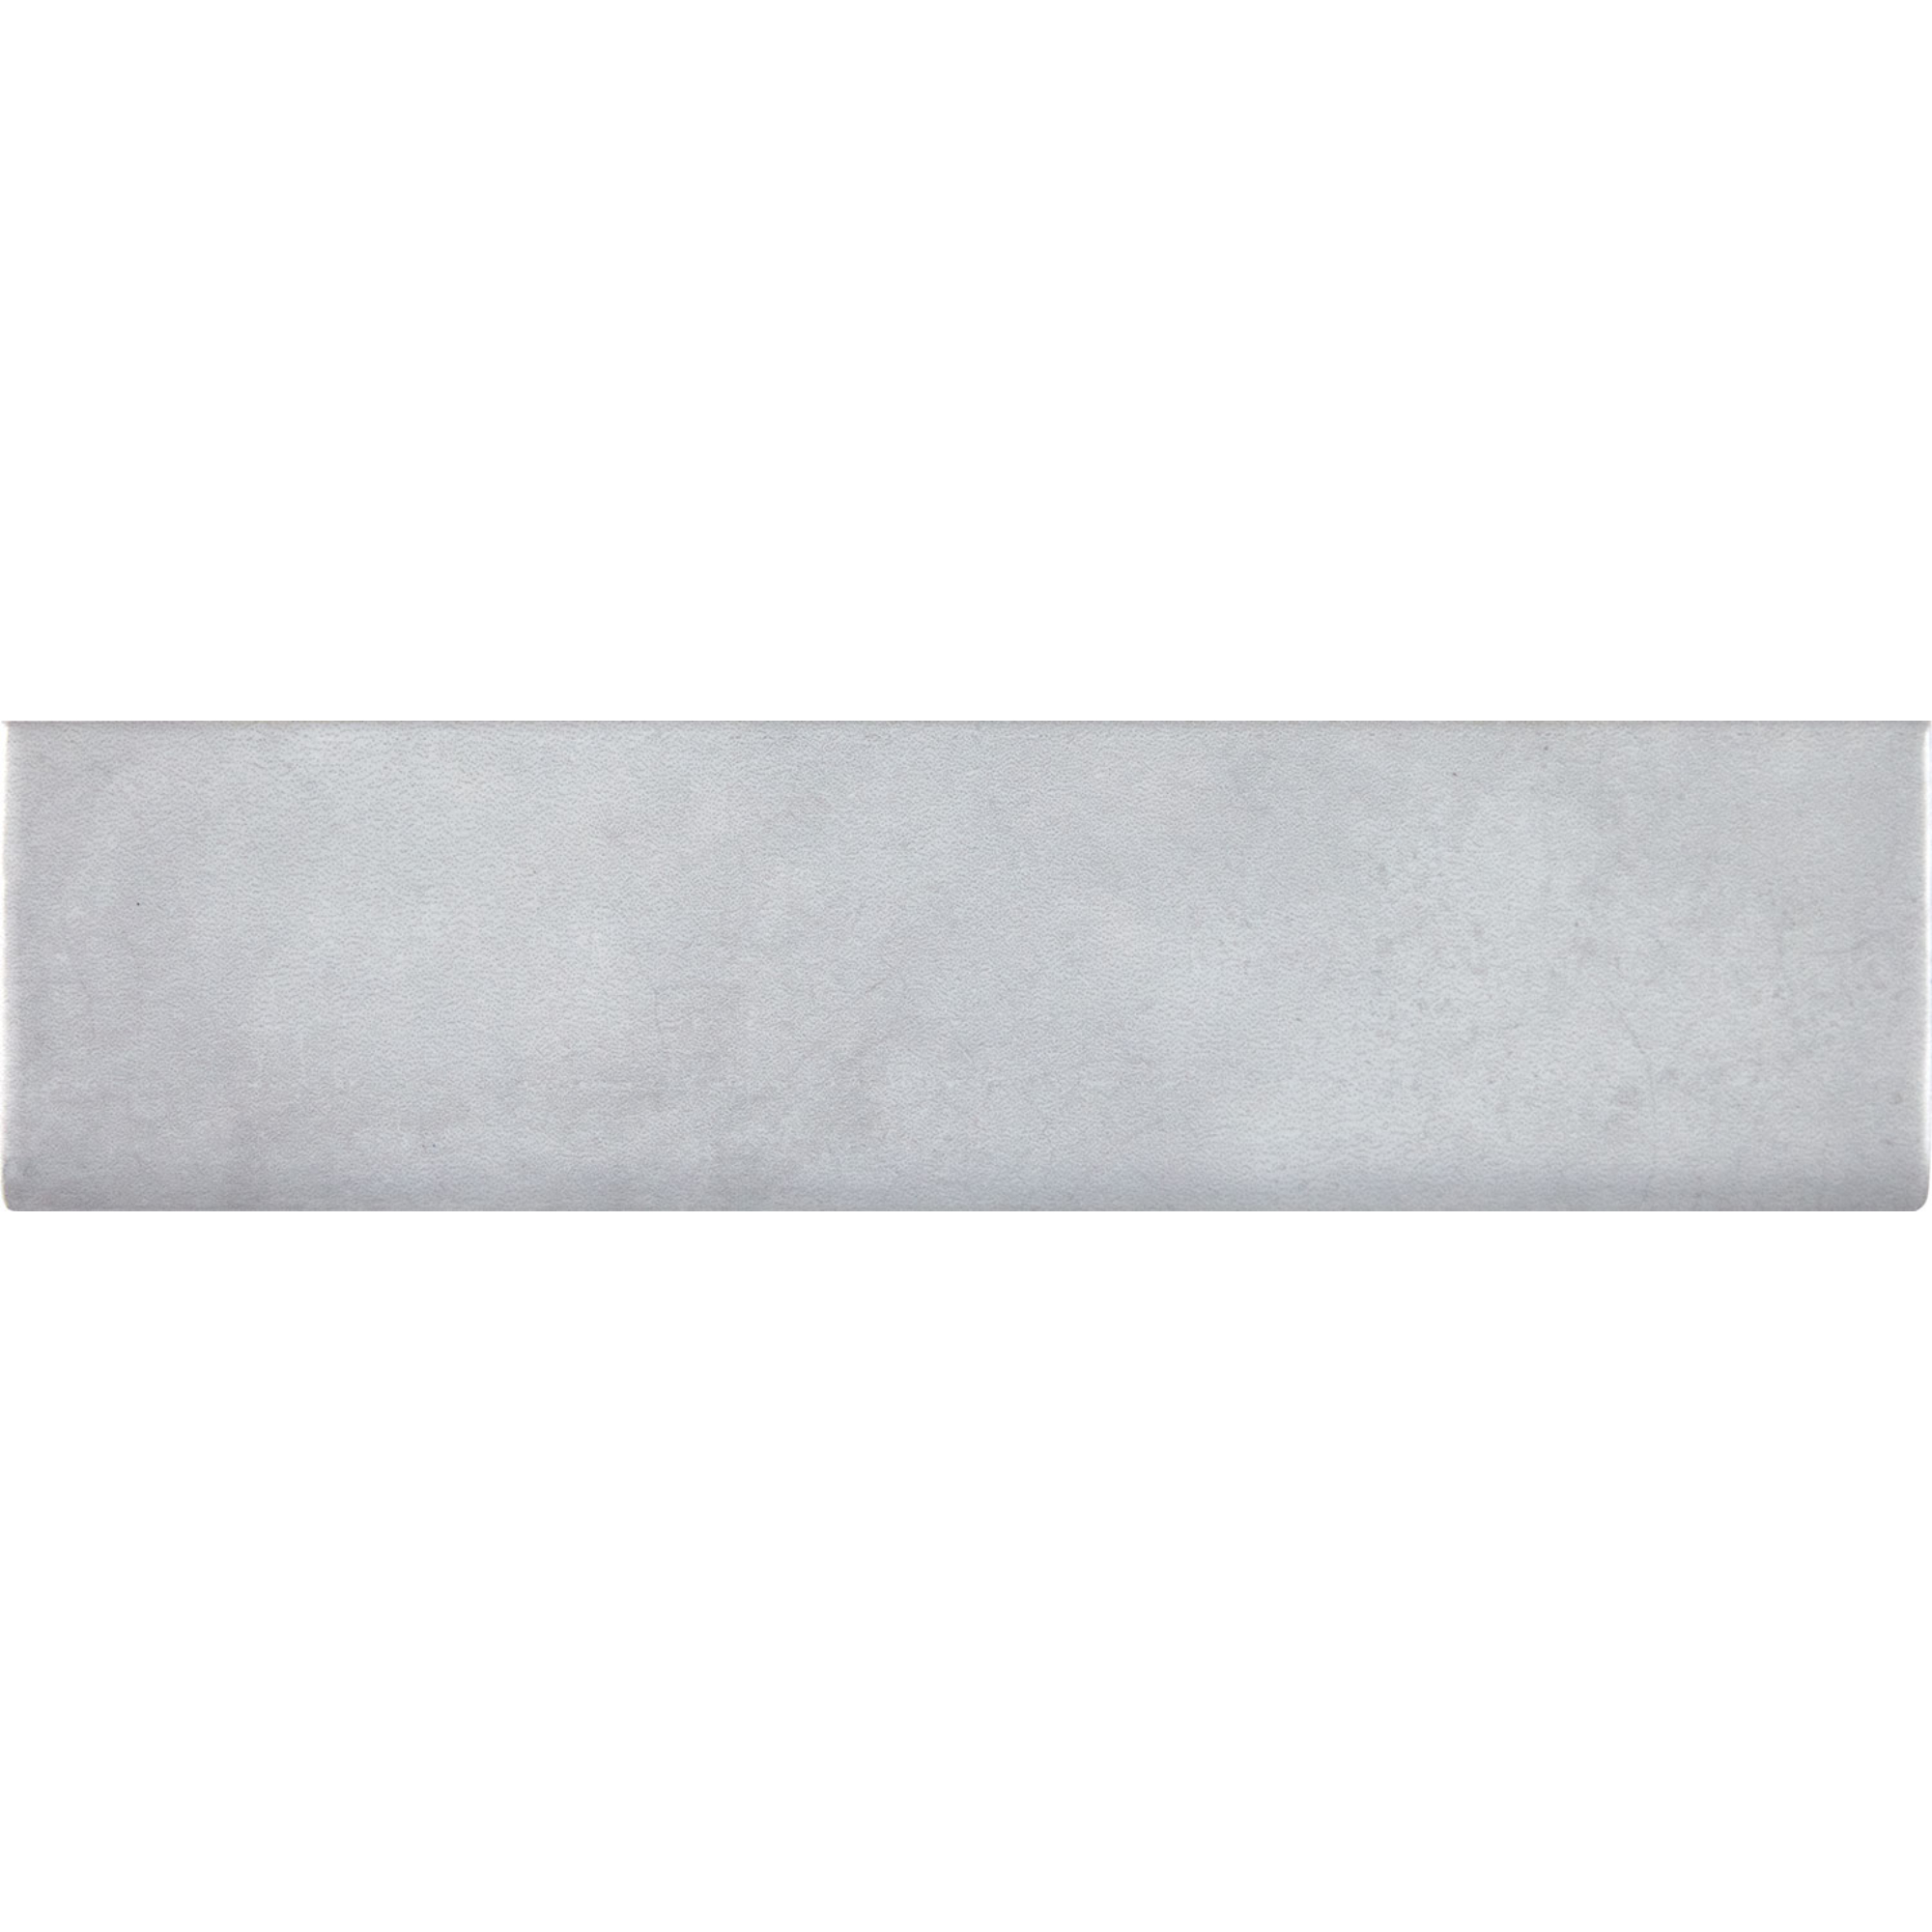 Splendours White Trim 7.5x30cm (23995)